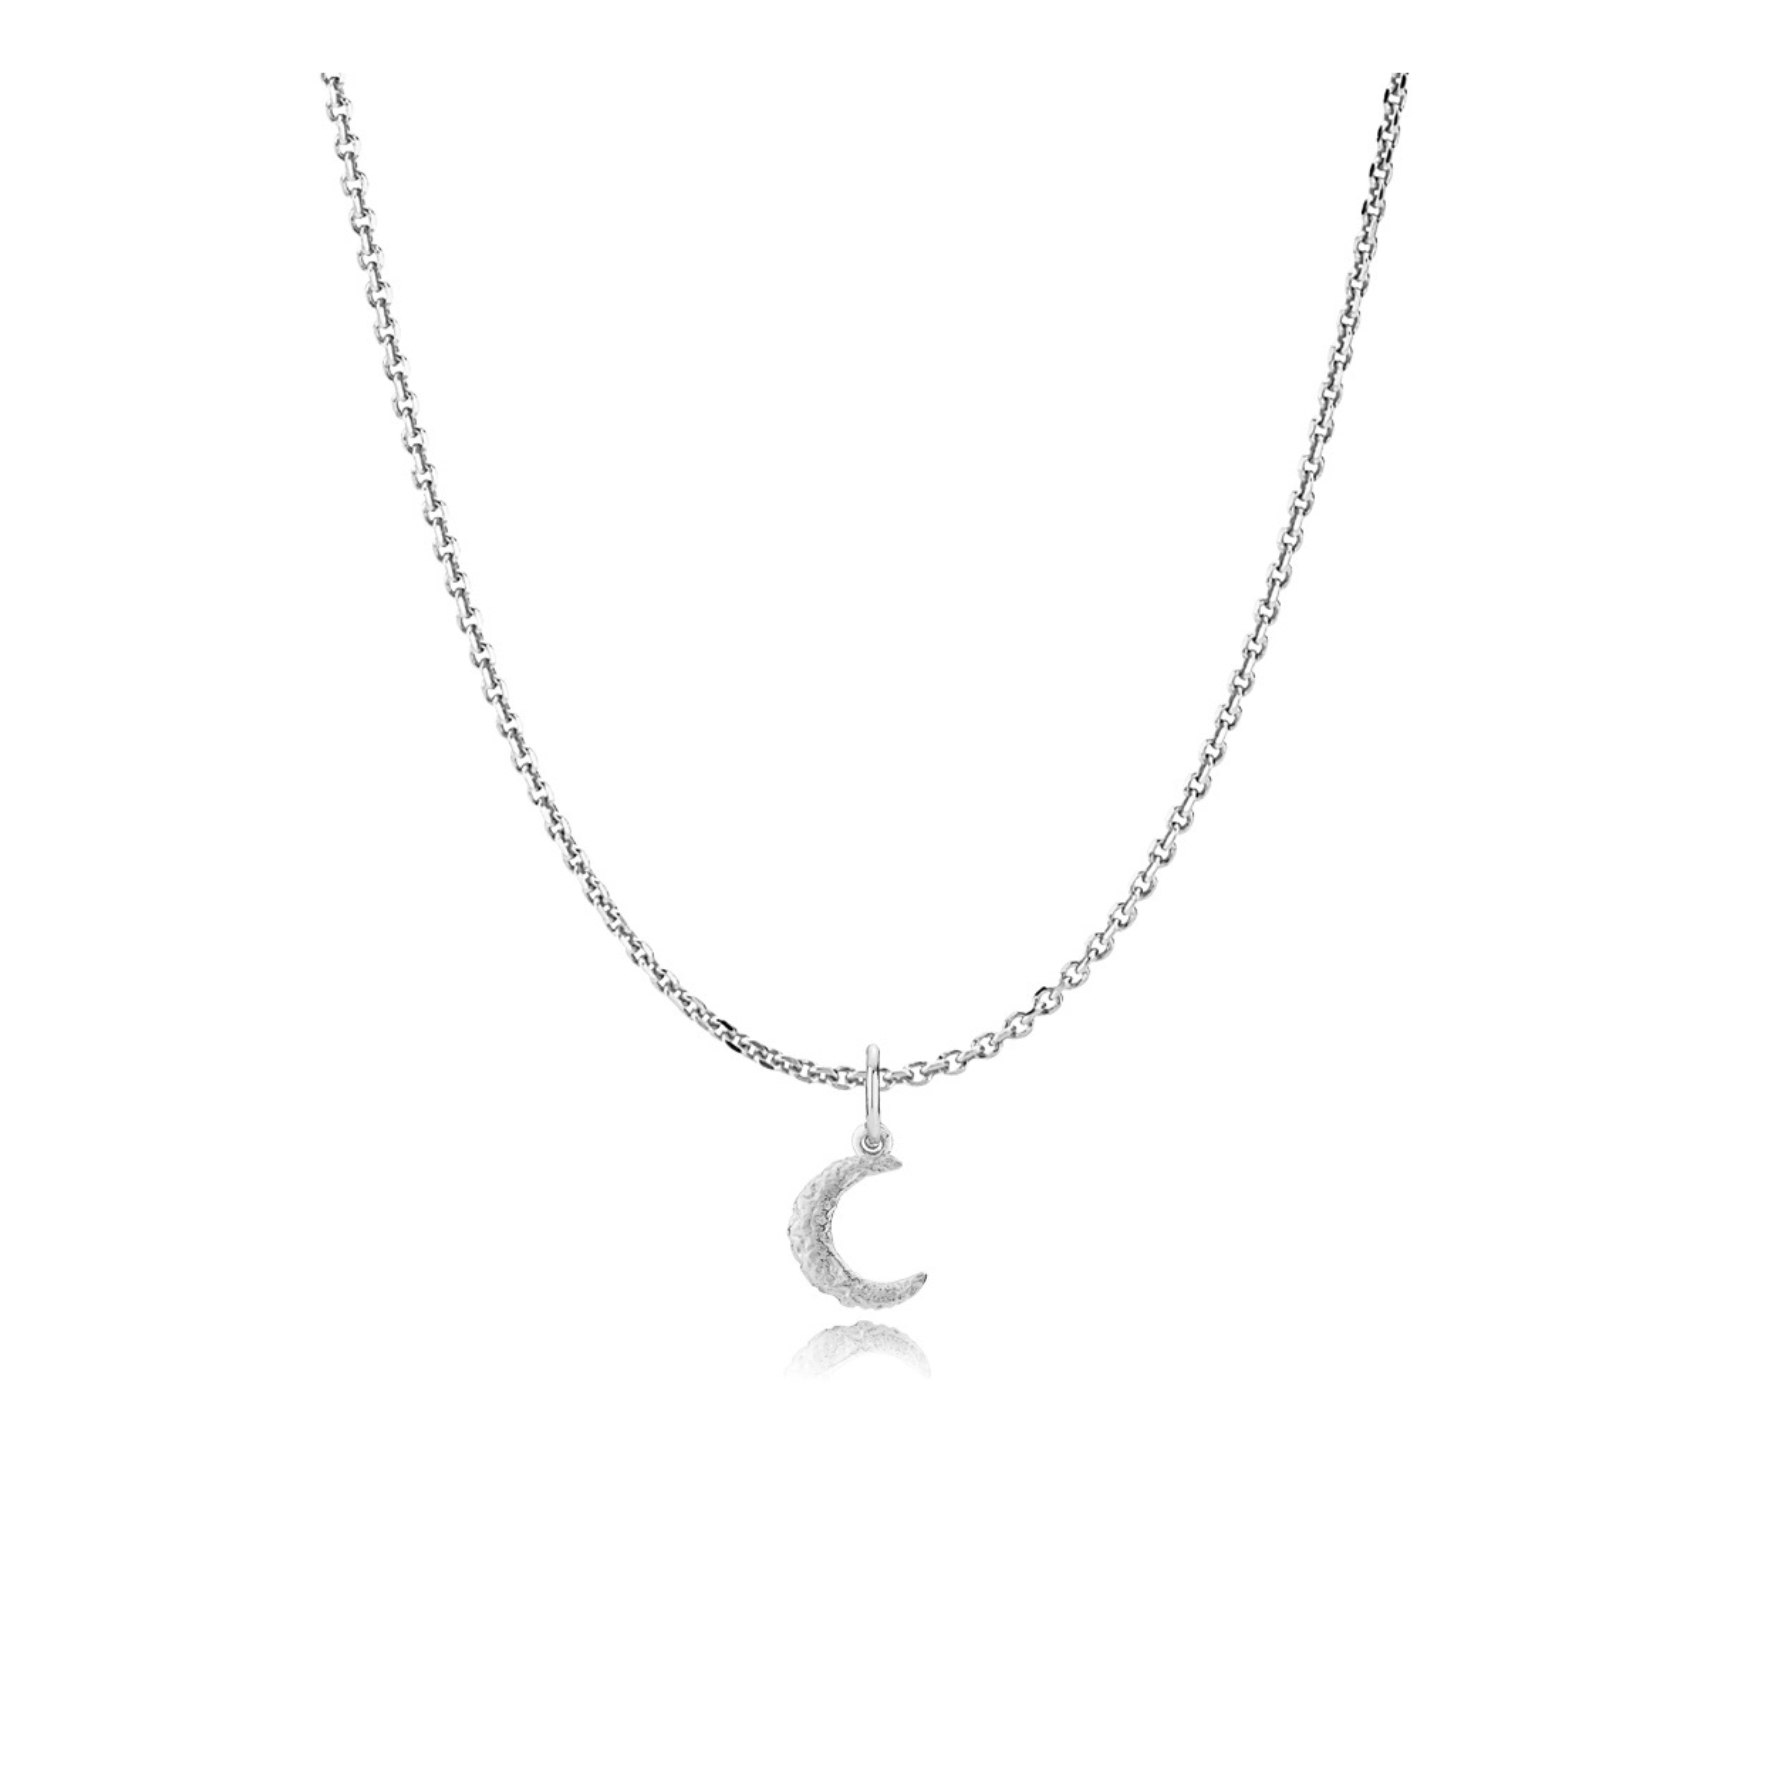 Universe Moon Necklace von Sistie in Silber Sterling 925